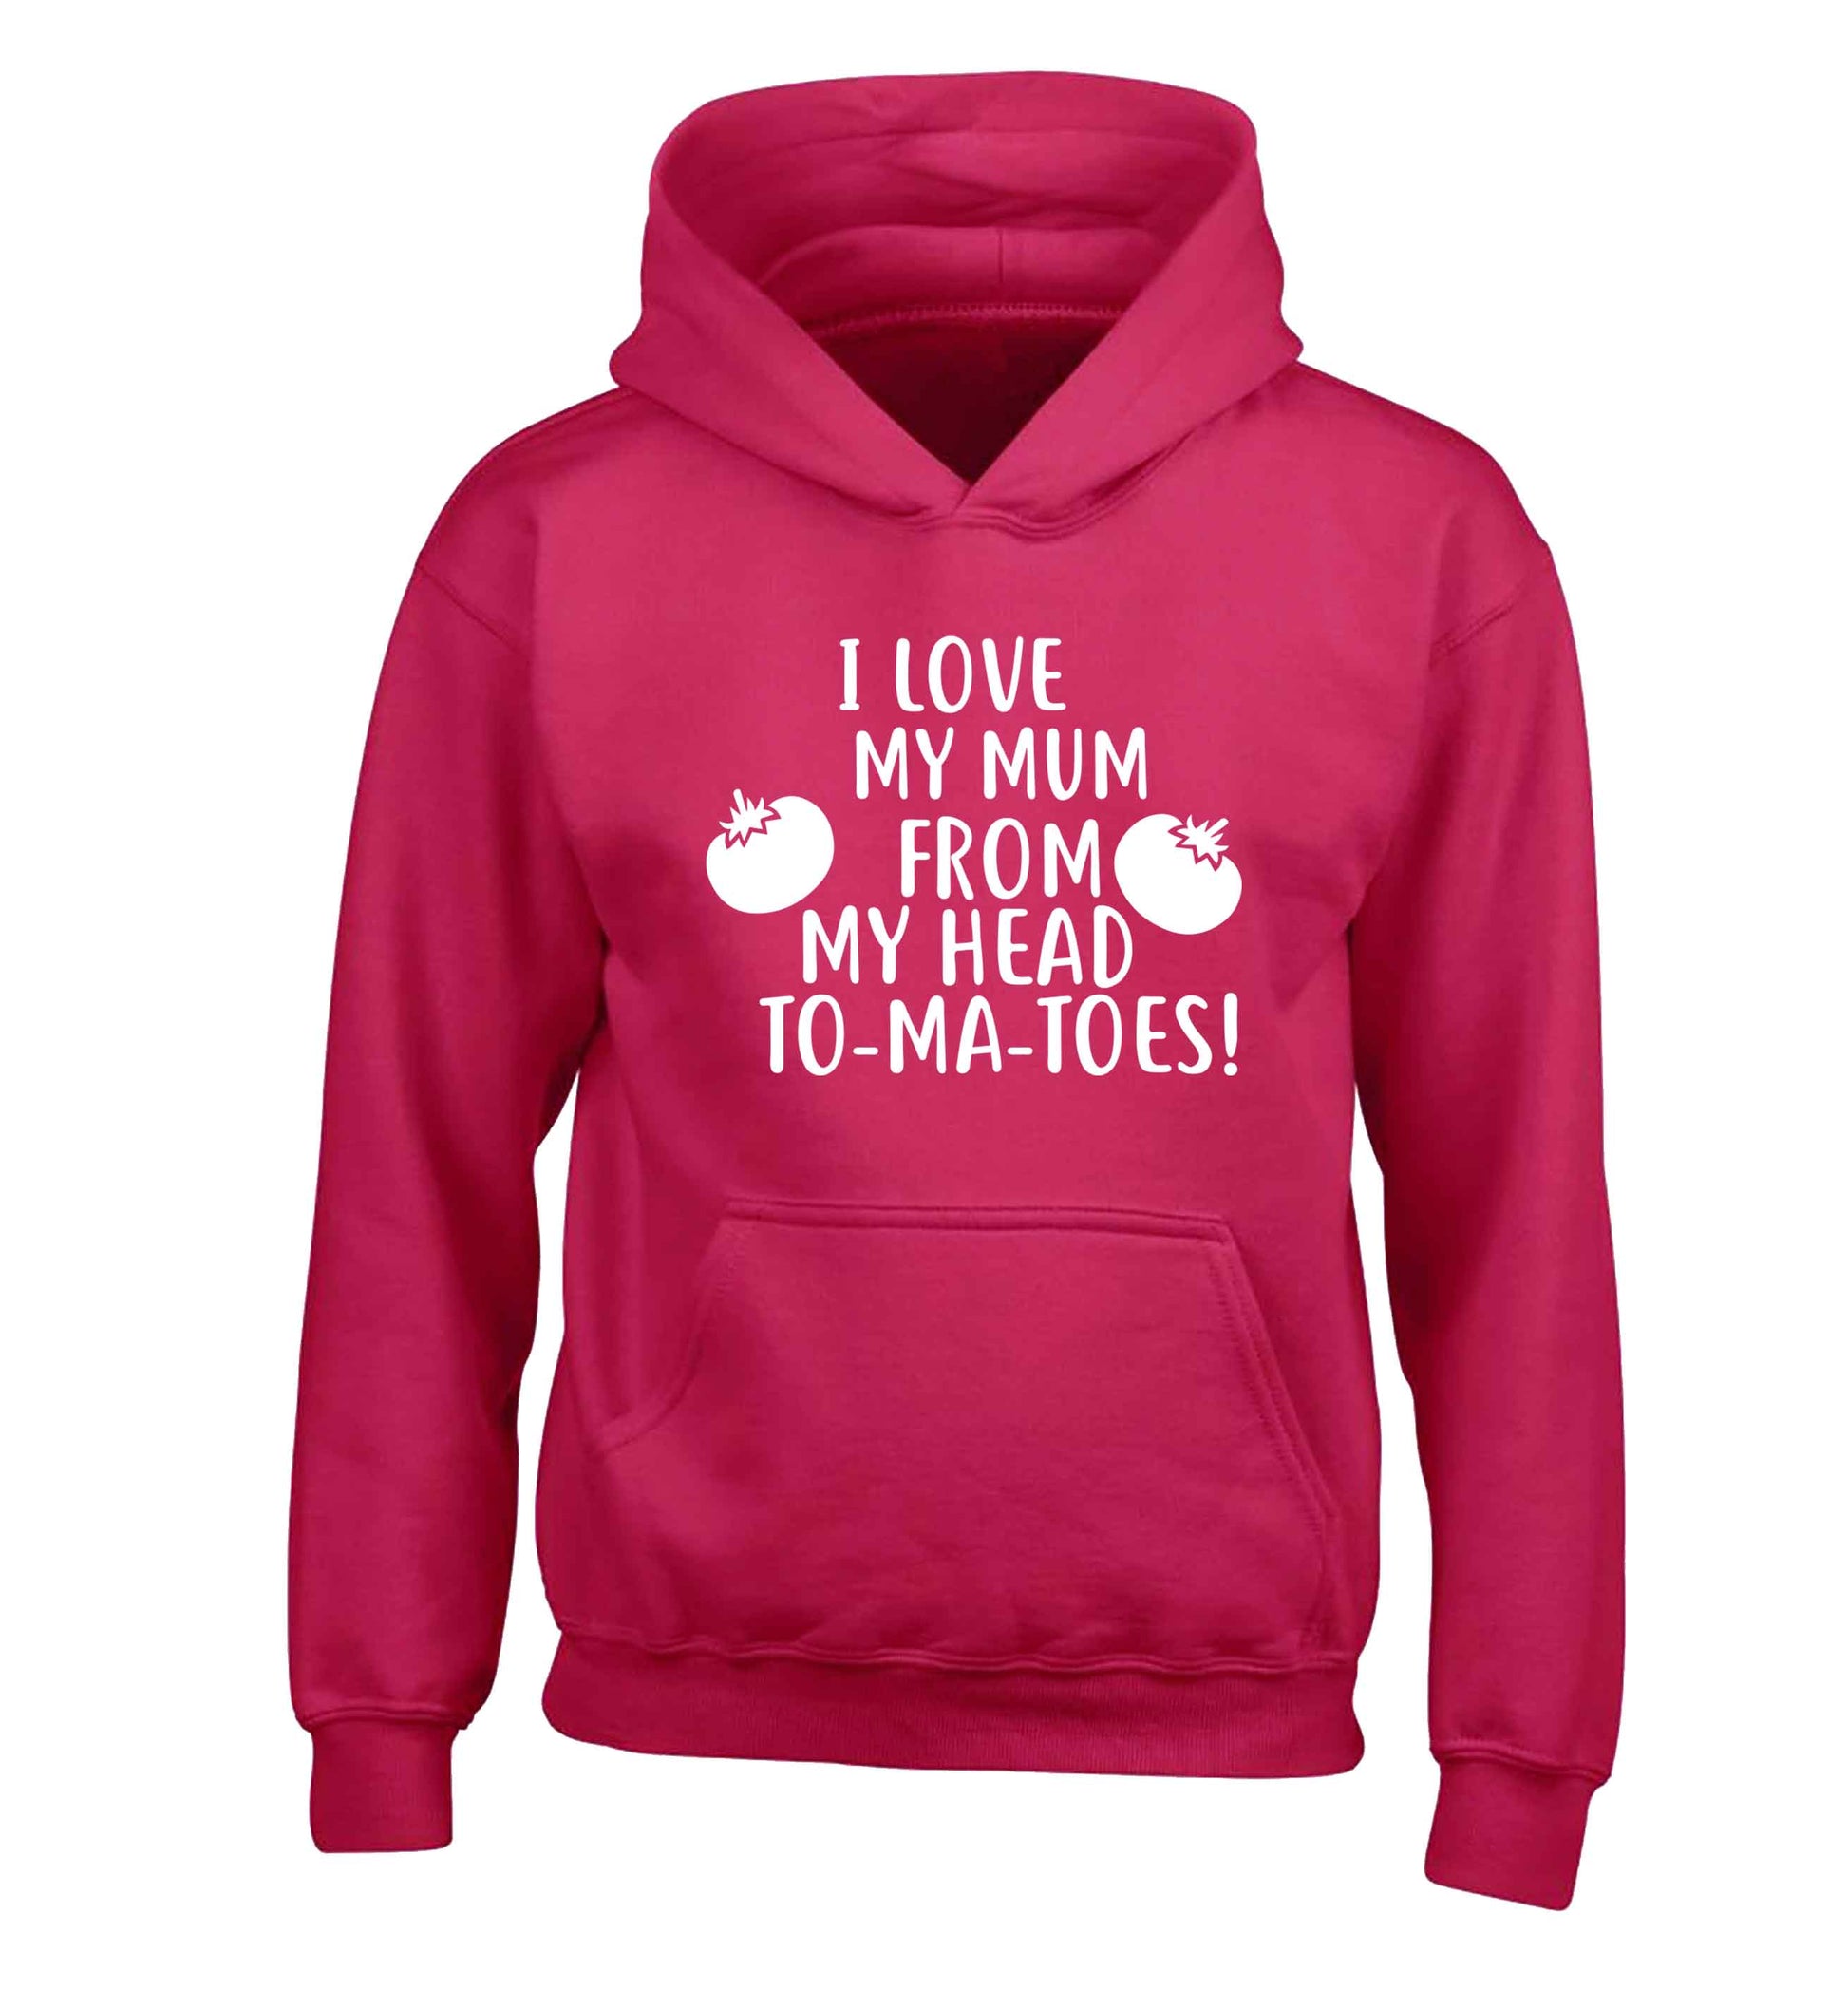 I love my mum from my head to-my-toes! children's pink hoodie 12-13 Years